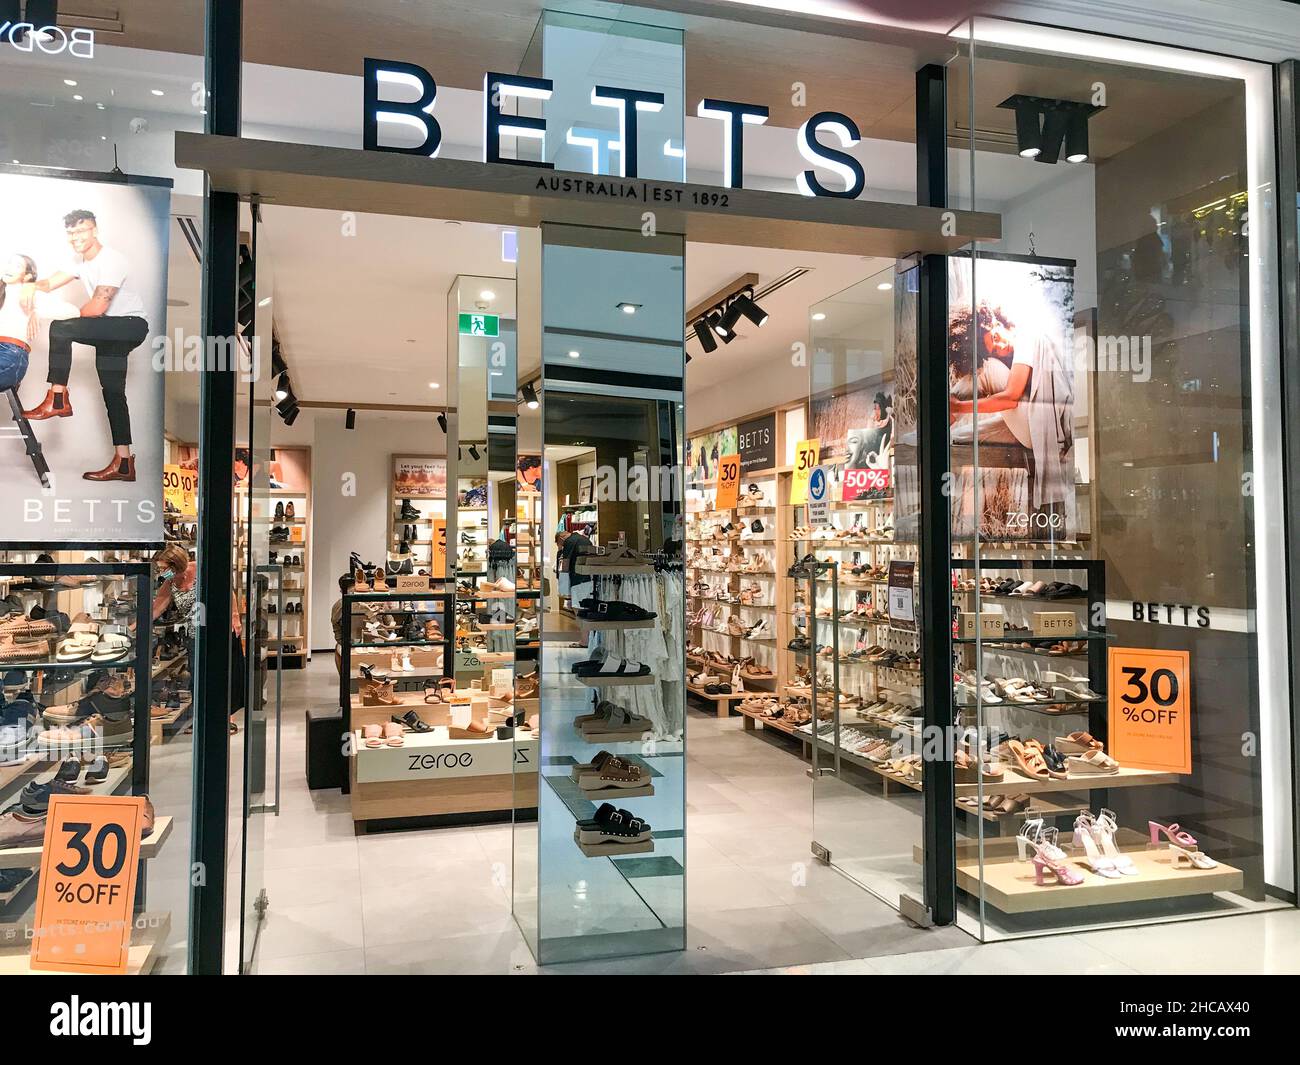 Betts shoe store front, Australian, Pacific Fair Shopping Centre Stock ...